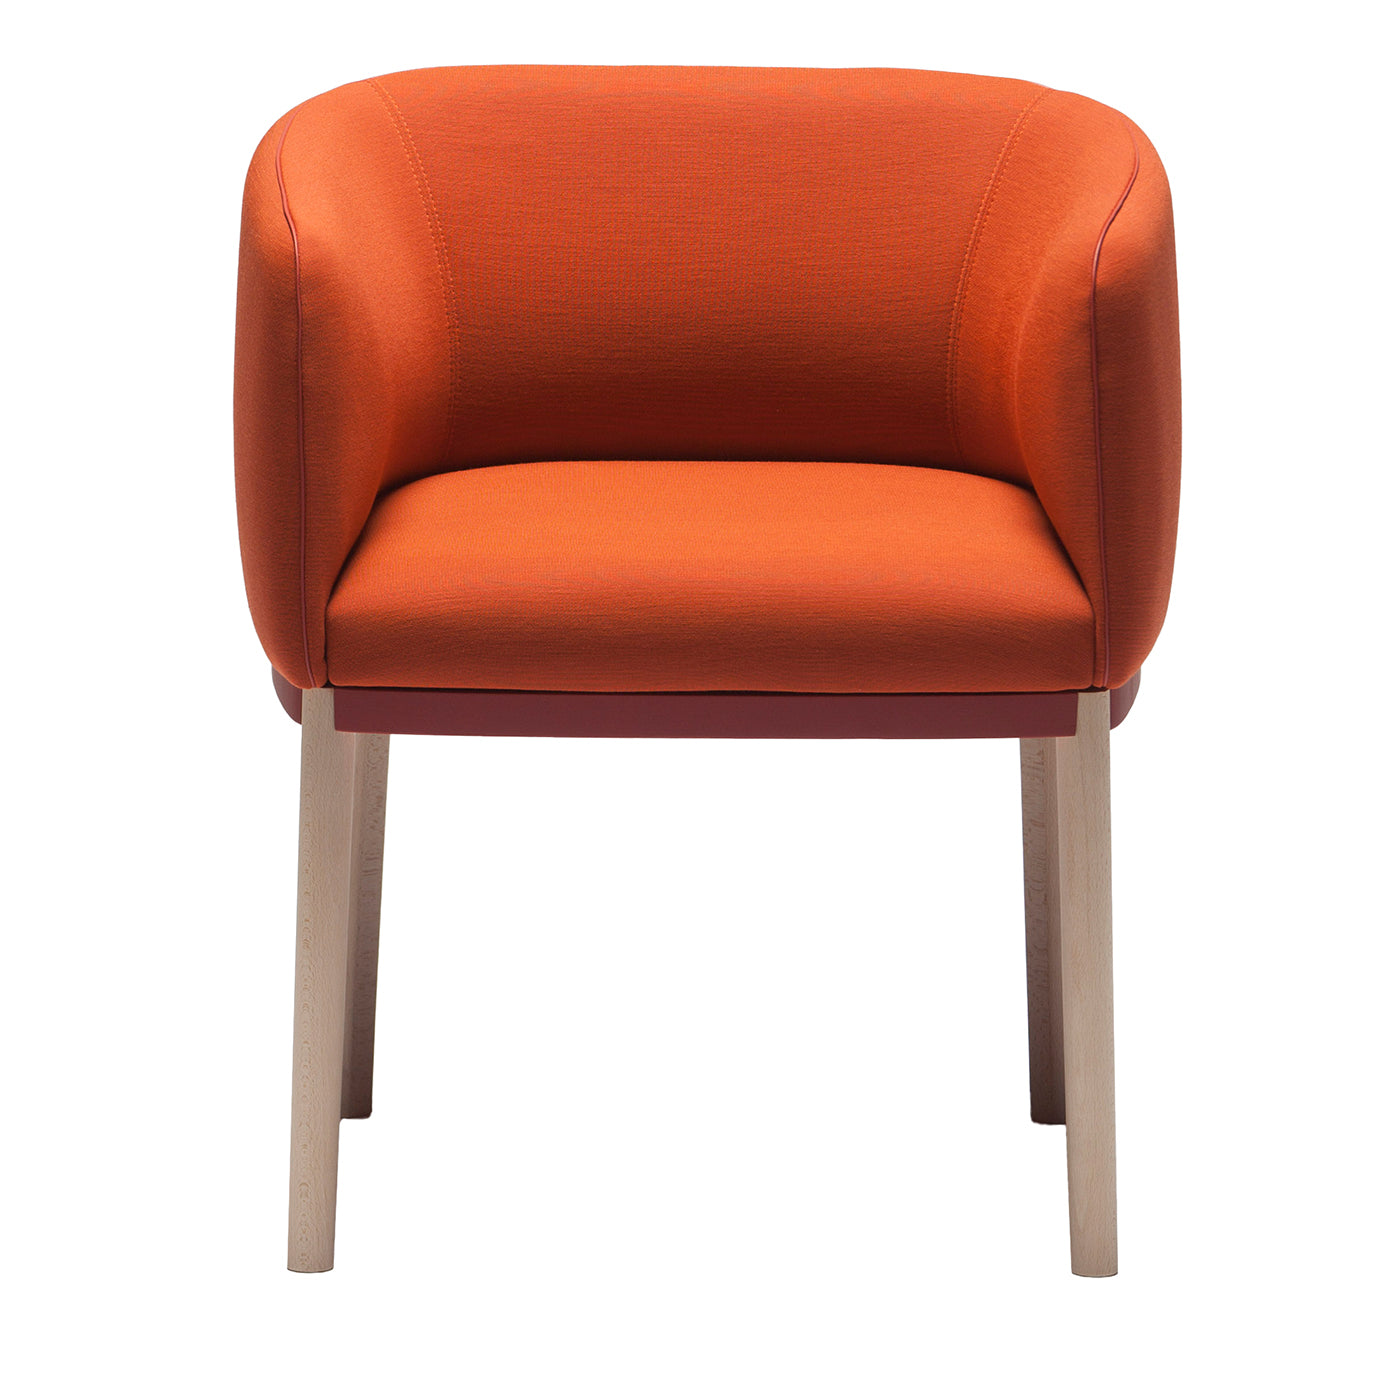 Cape 809 Orange Chair by Debiasi Sandri - Tekhne Collection - Main view